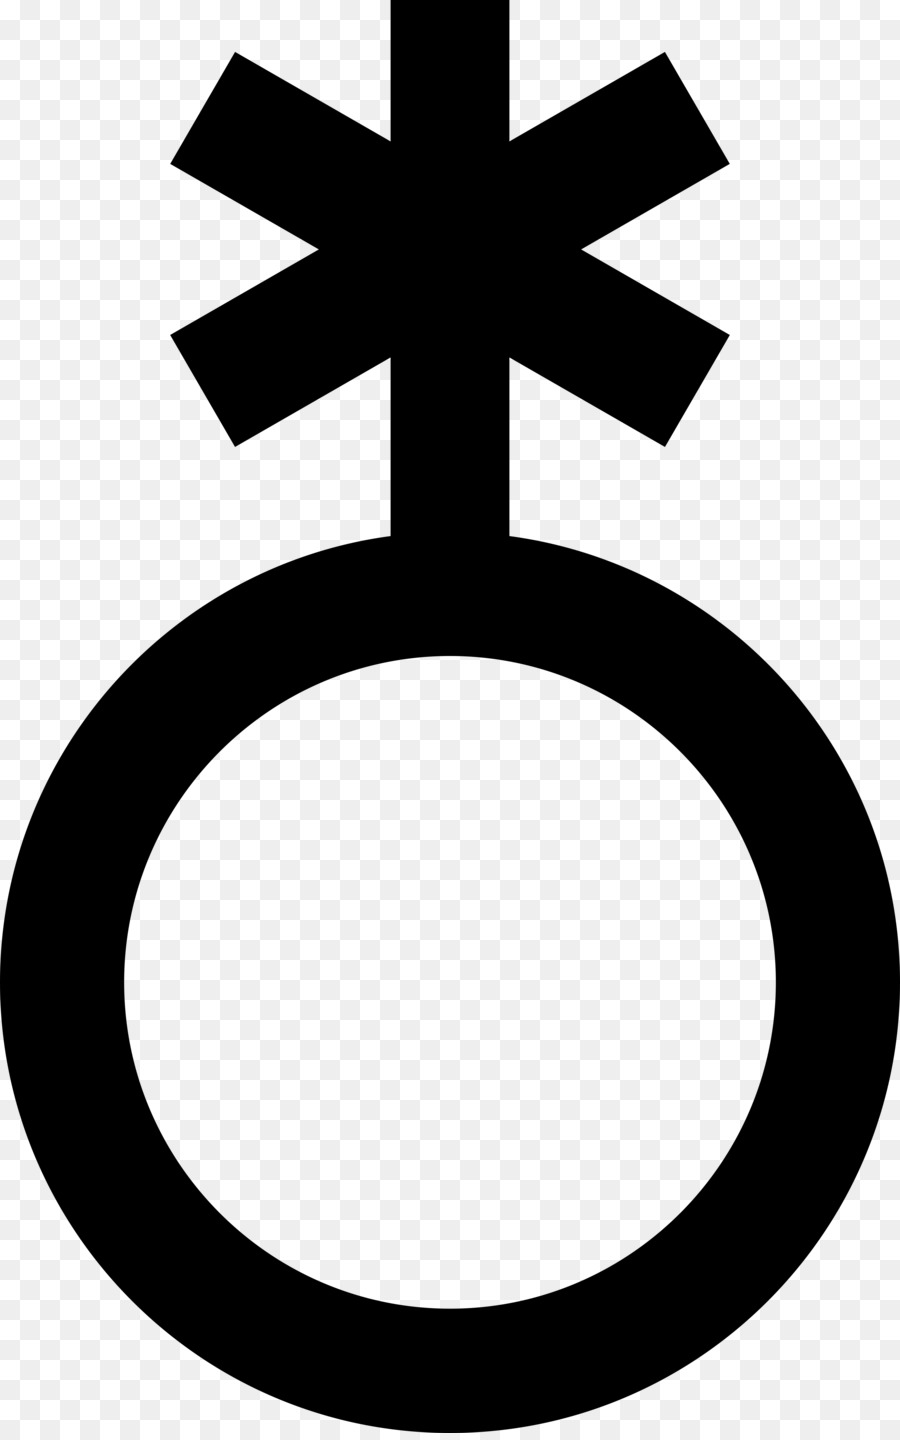 Mangel an gender-Identitäten, Gender-binären Geschlecht symbol der LGBT-Symbole - Symbol